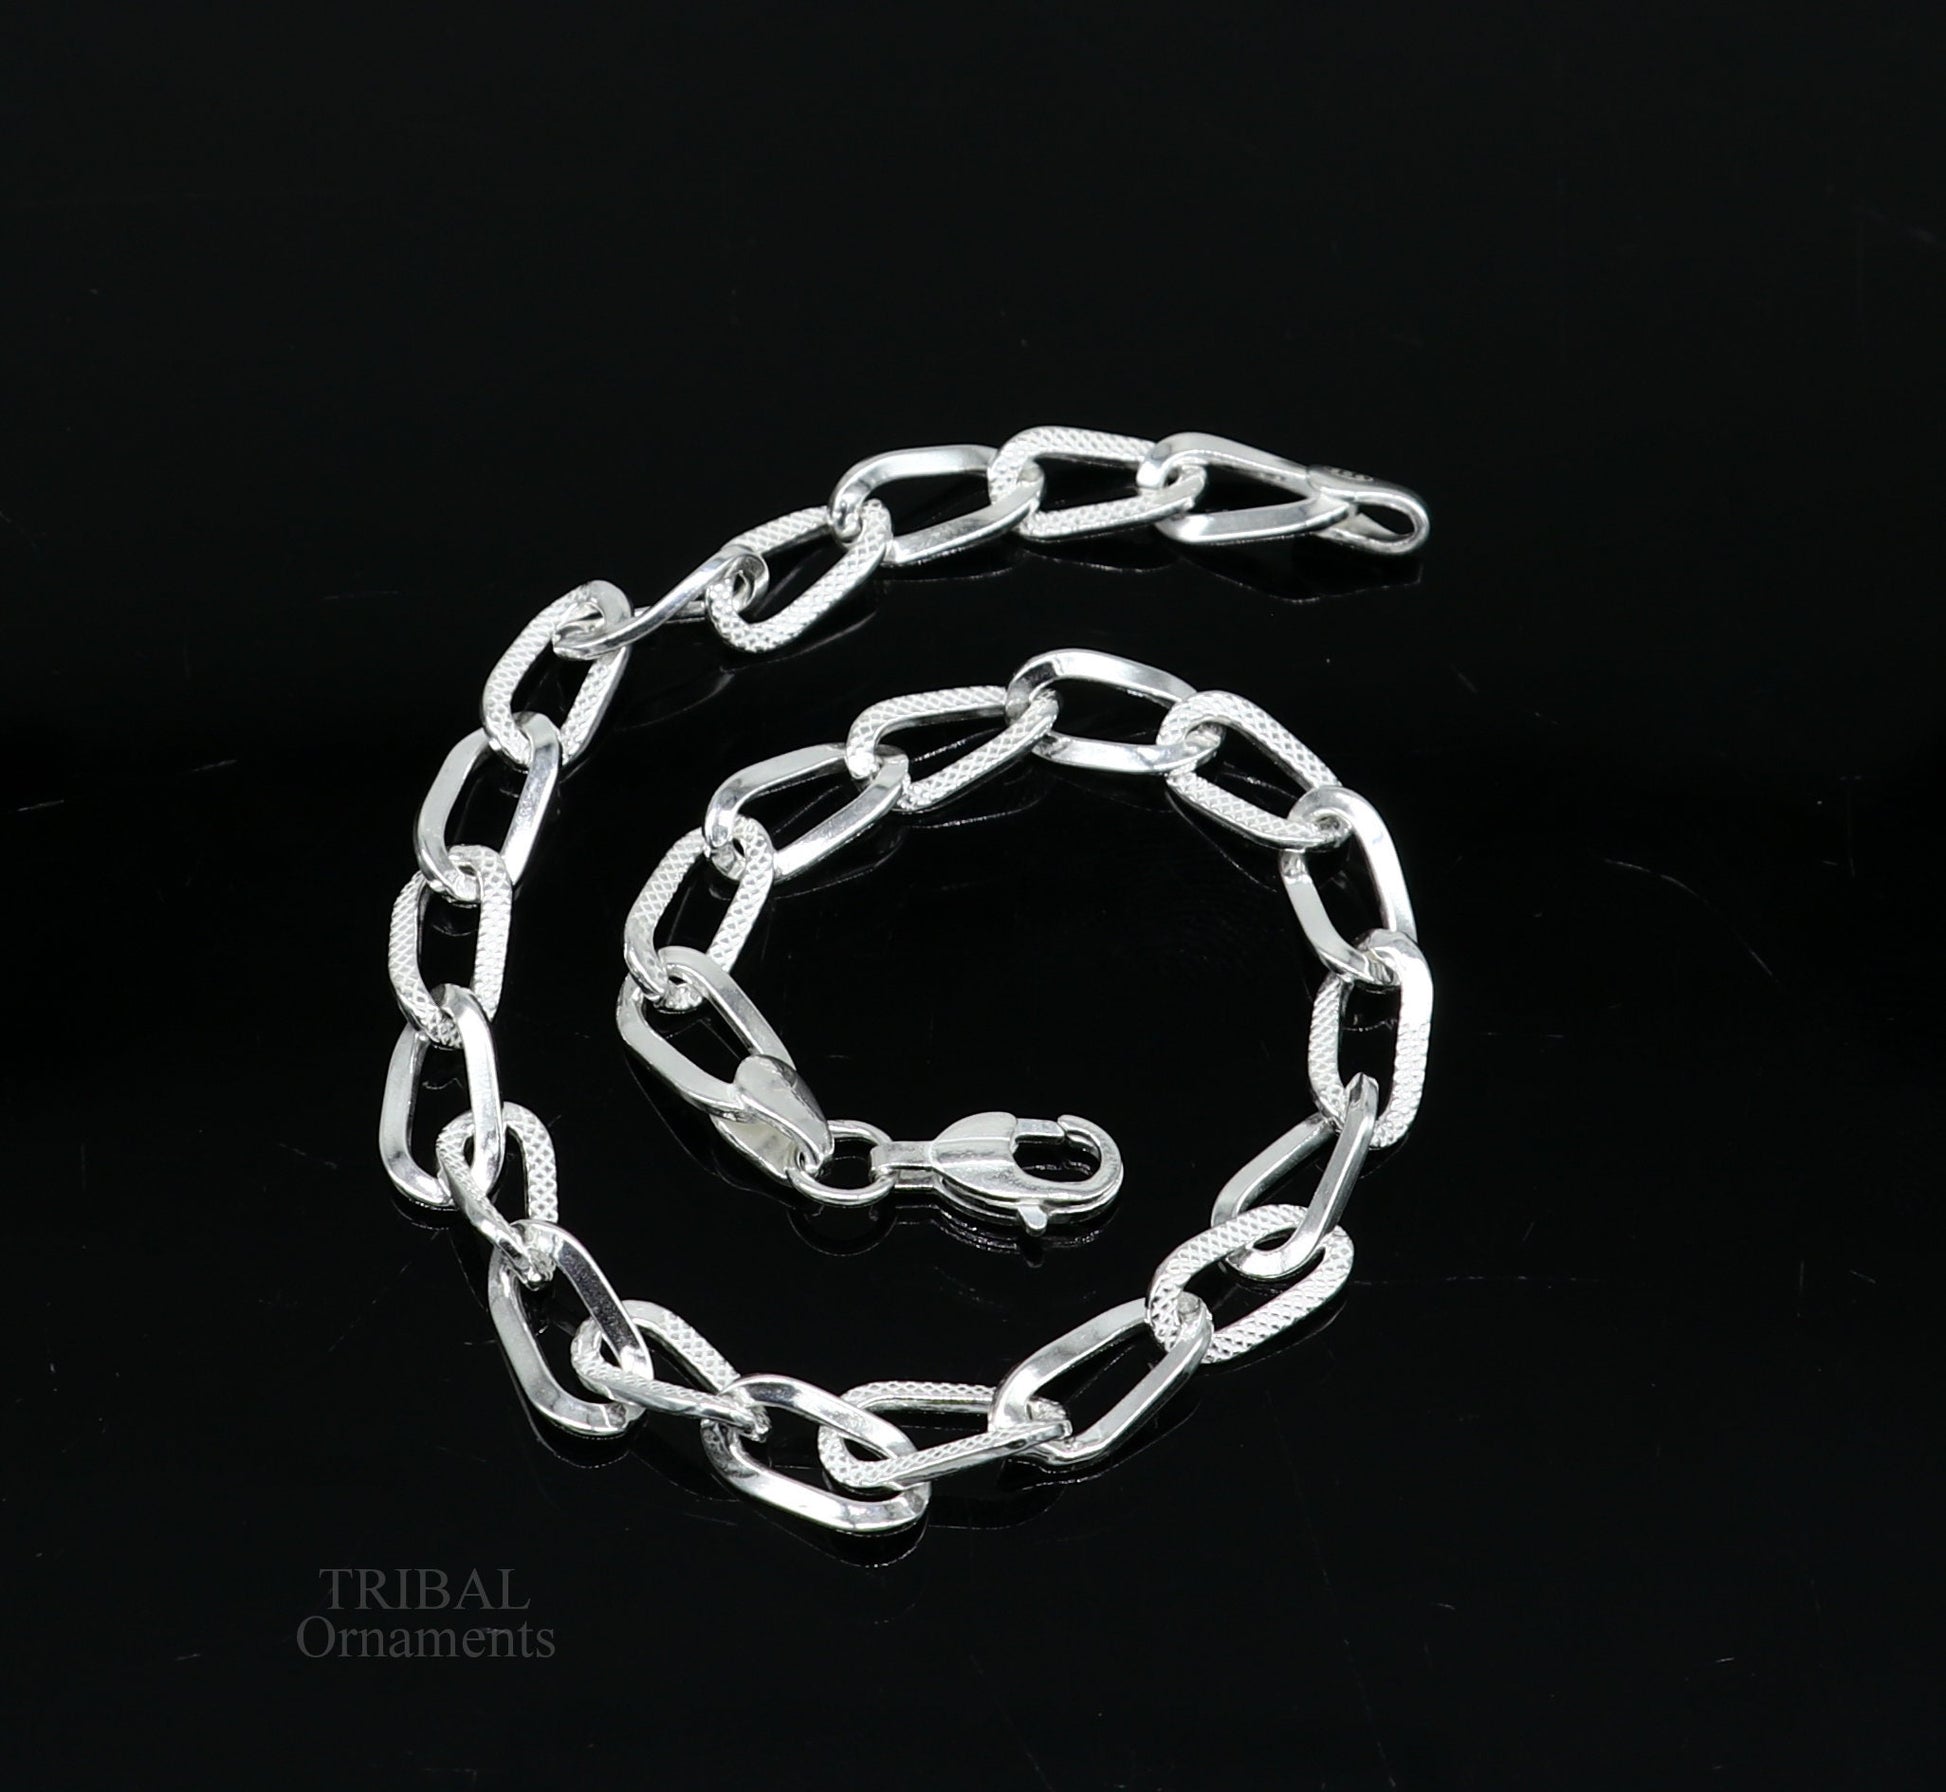 8" bracelet 925 sterling silver handmade new fancy stylish solid chain bracelet, stylish bracelet gifting elegant unisex jewelry nsbr513 - TRIBAL ORNAMENTS